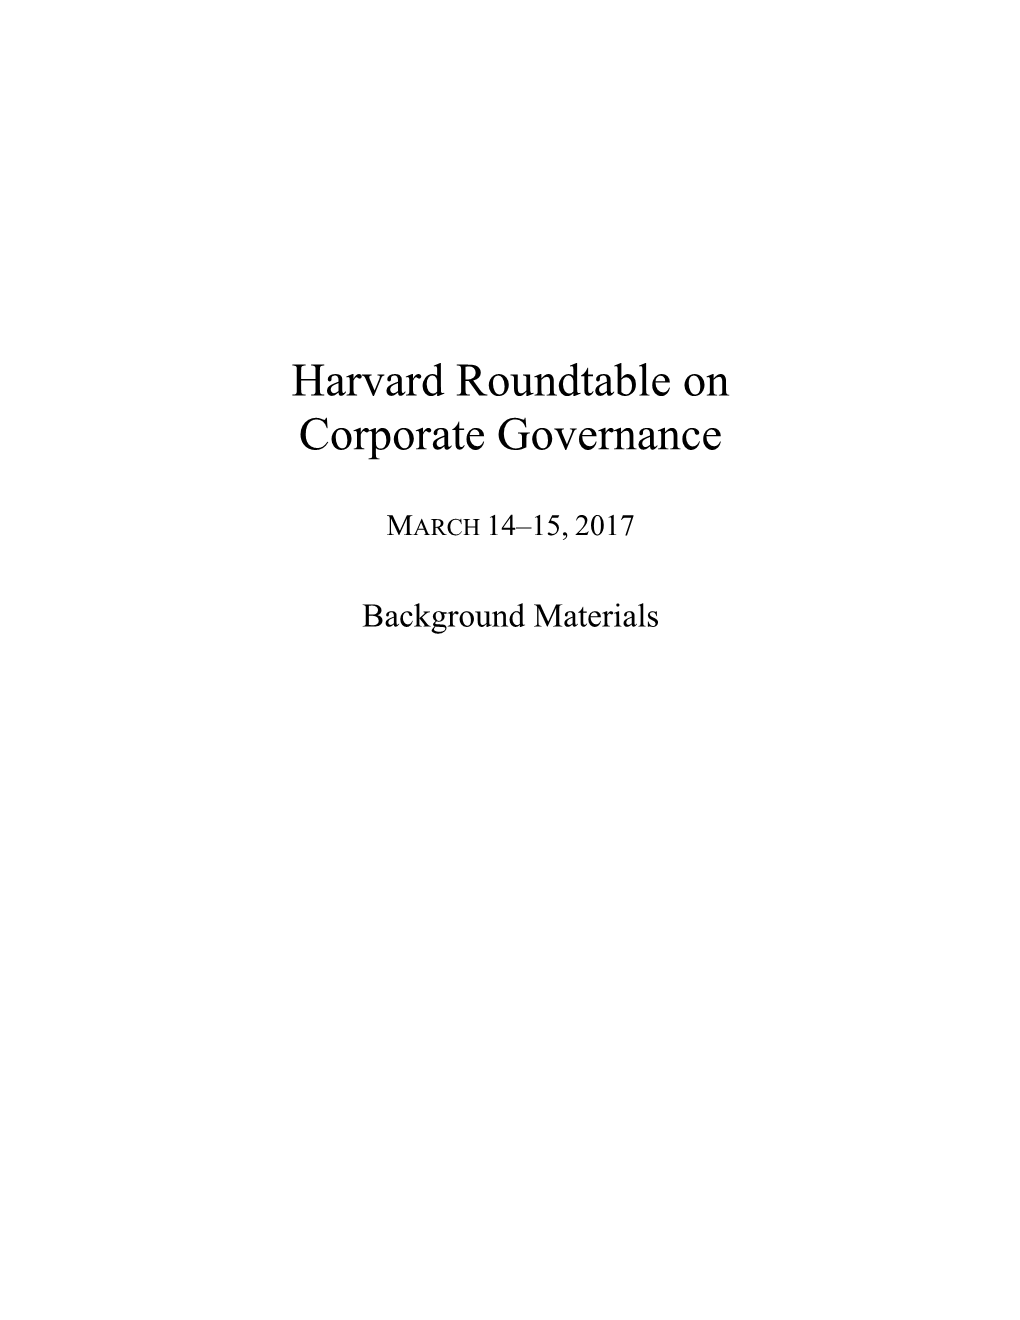 Harvard Roundtable on Corporate Governance